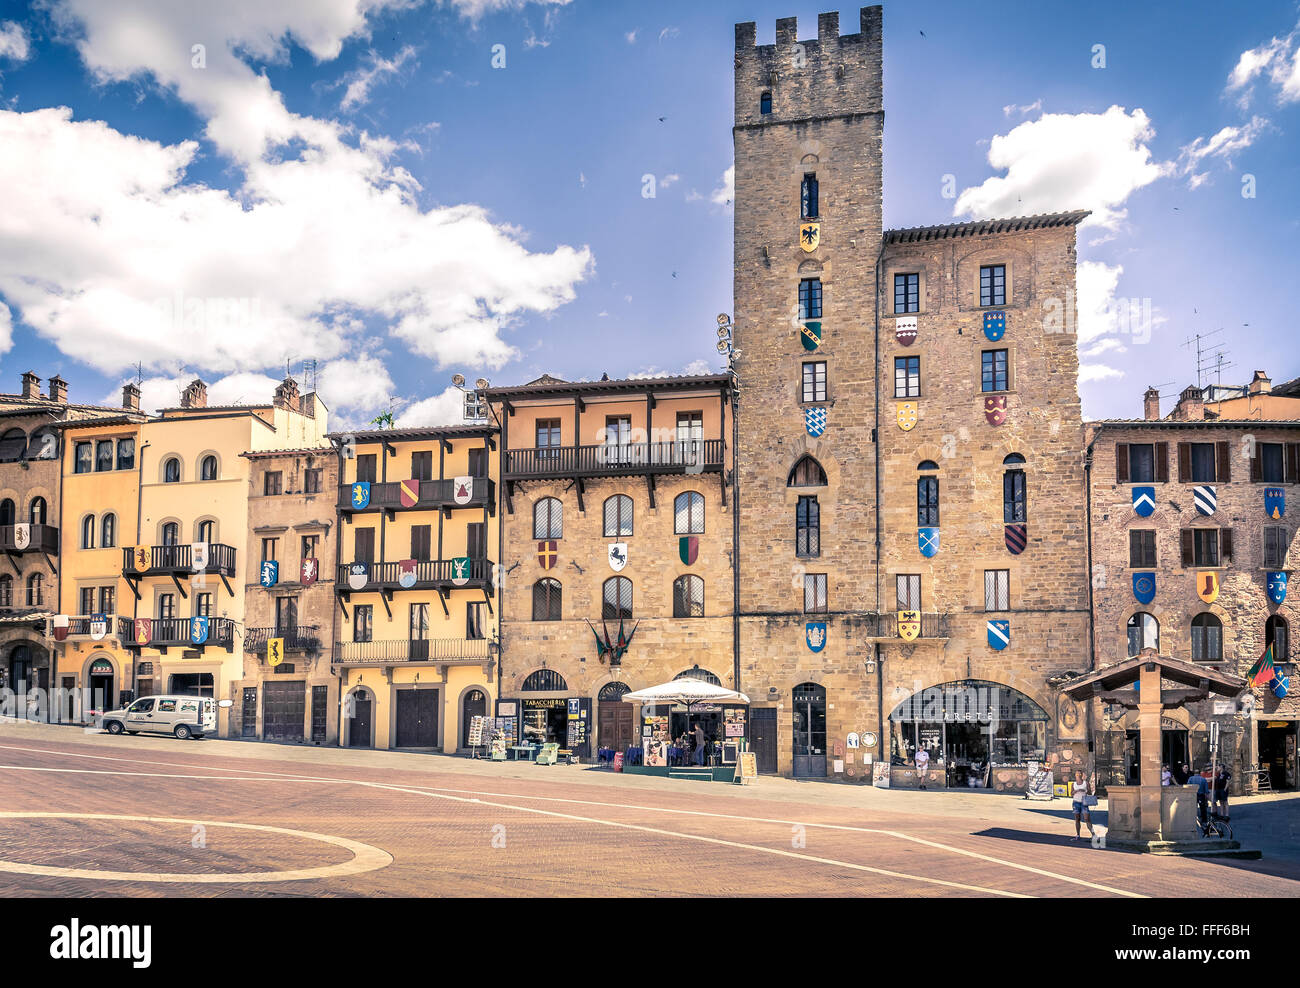 AREZZO, ITALIE - 26 juin 2015 : La Piazza Grande, la place principale de la ville de Arezzo toscane, italie Banque D'Images